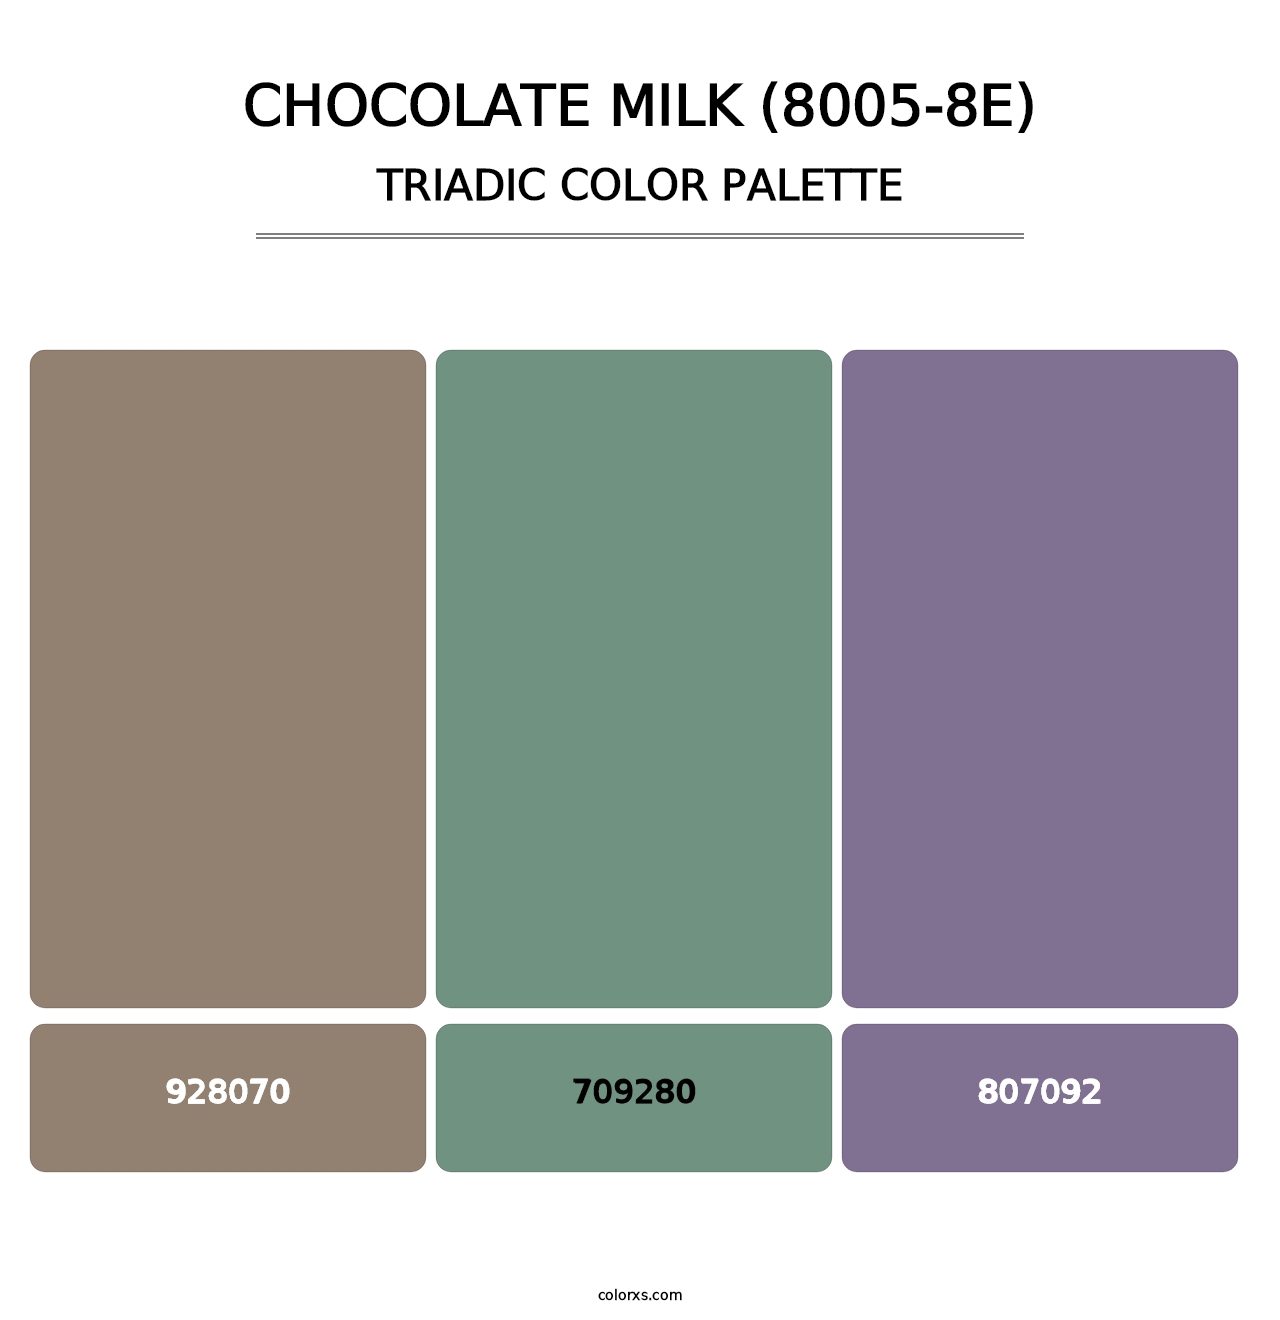 Chocolate Milk (8005-8E) - Triadic Color Palette